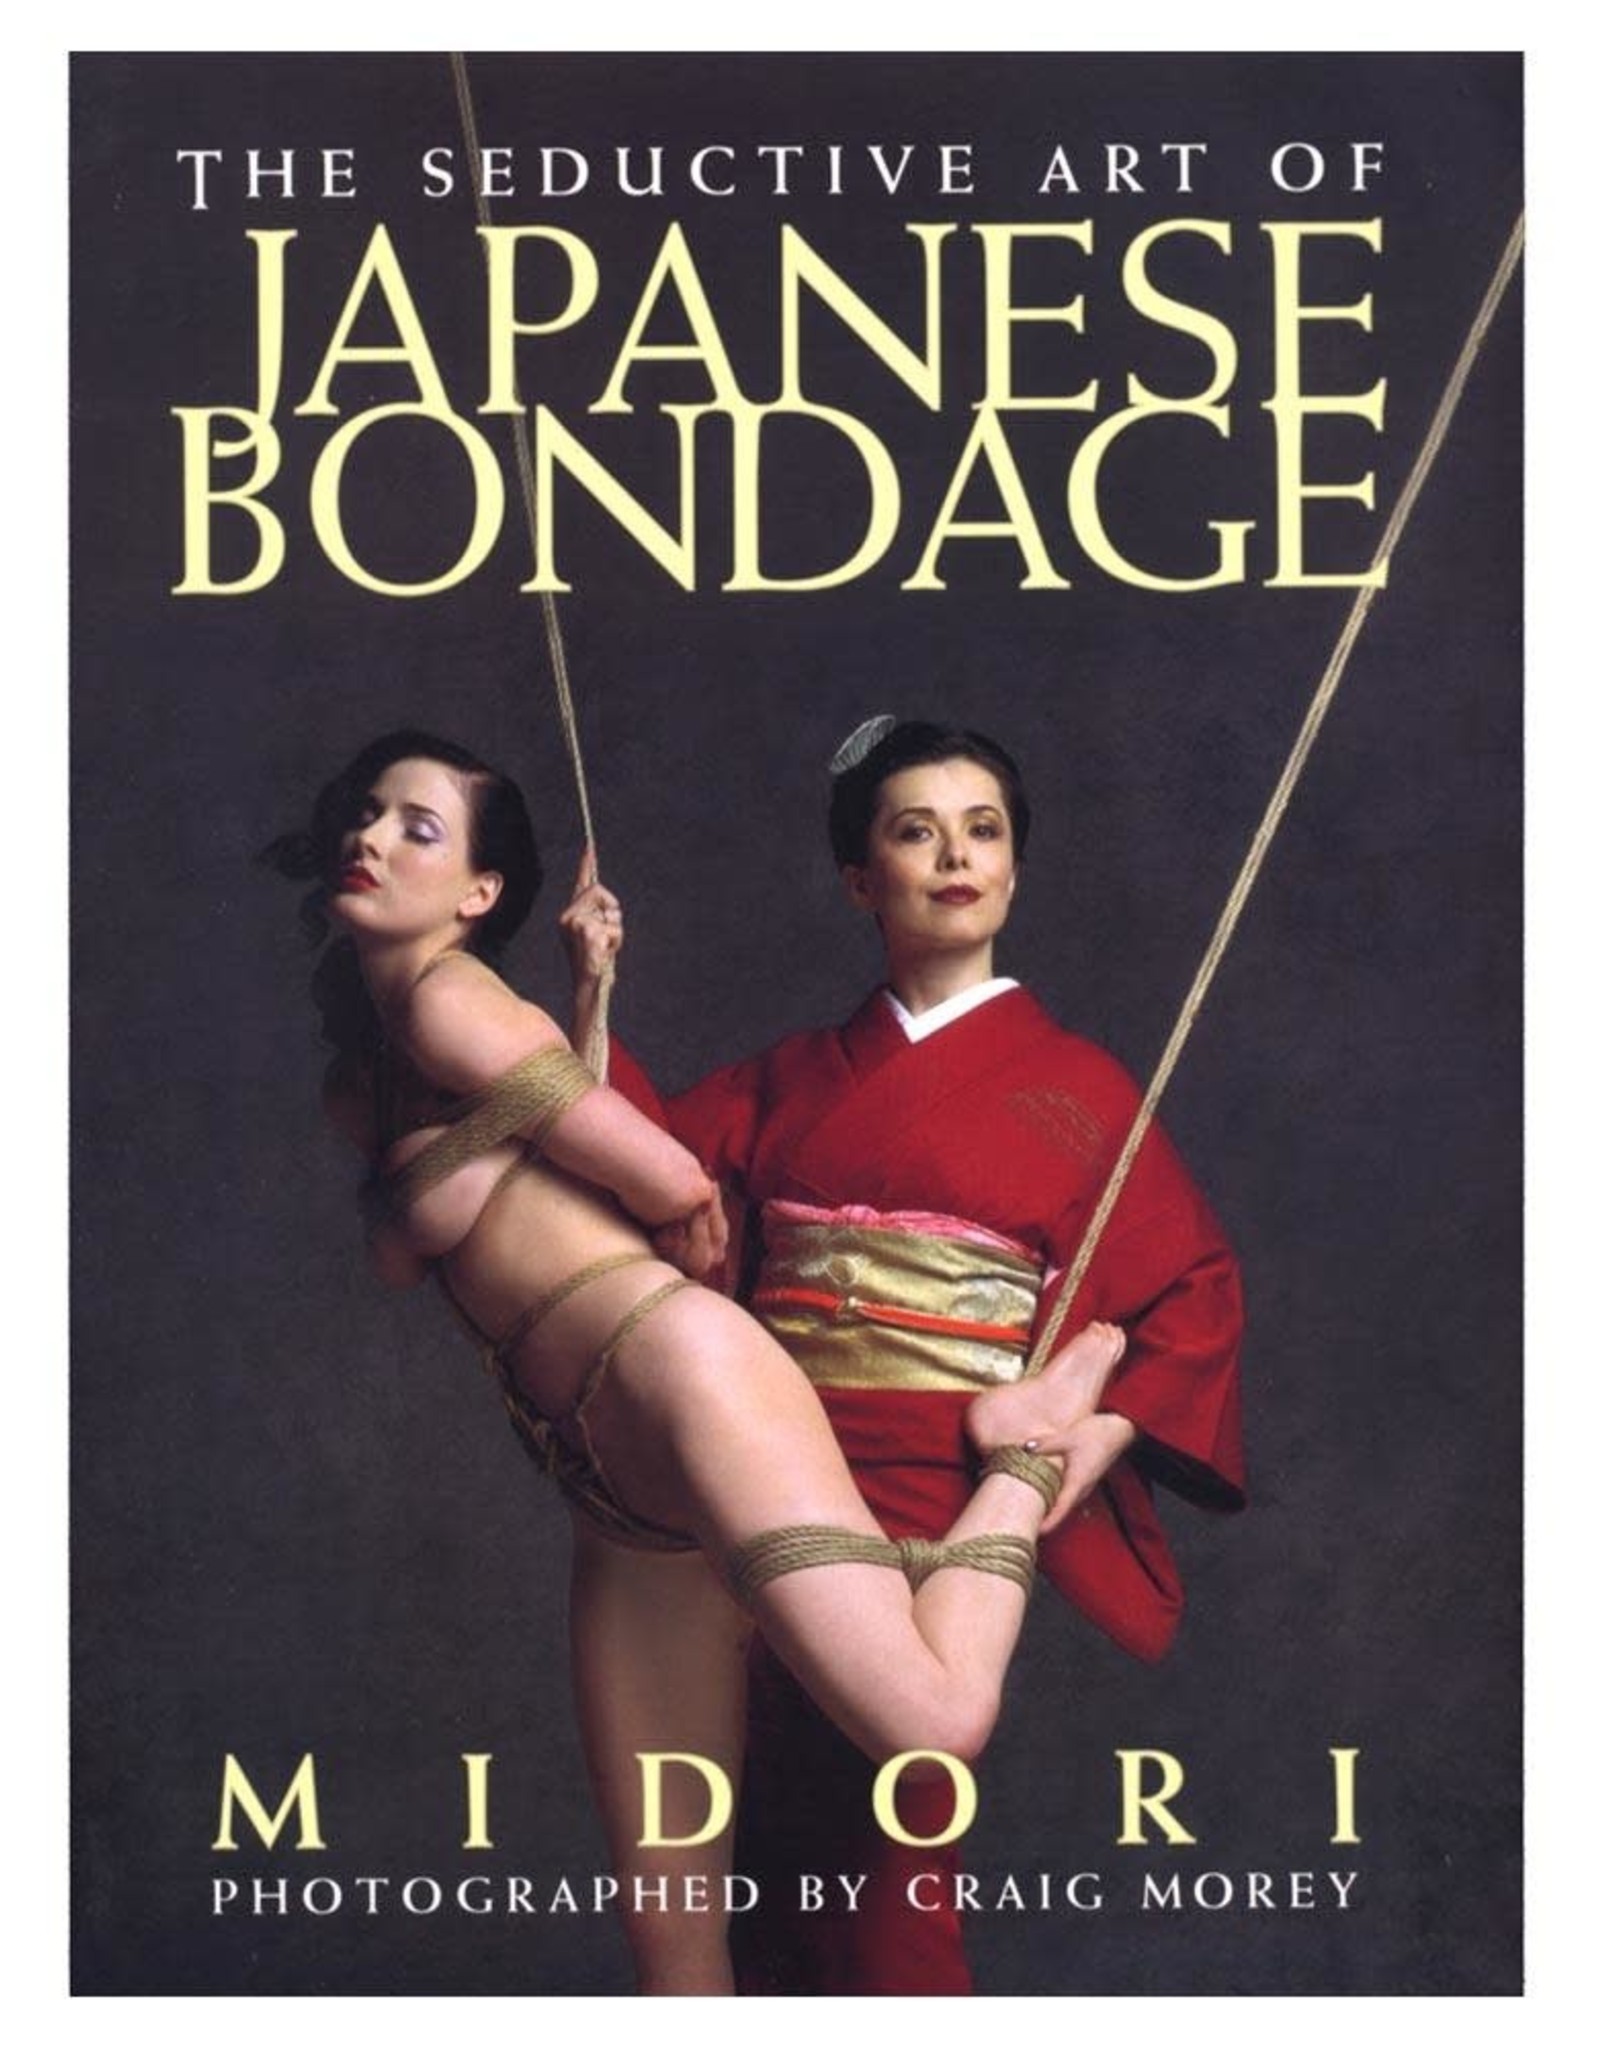 Stockroom Stockroom Books The Seductive Art Of Japanese Bondage by Midori